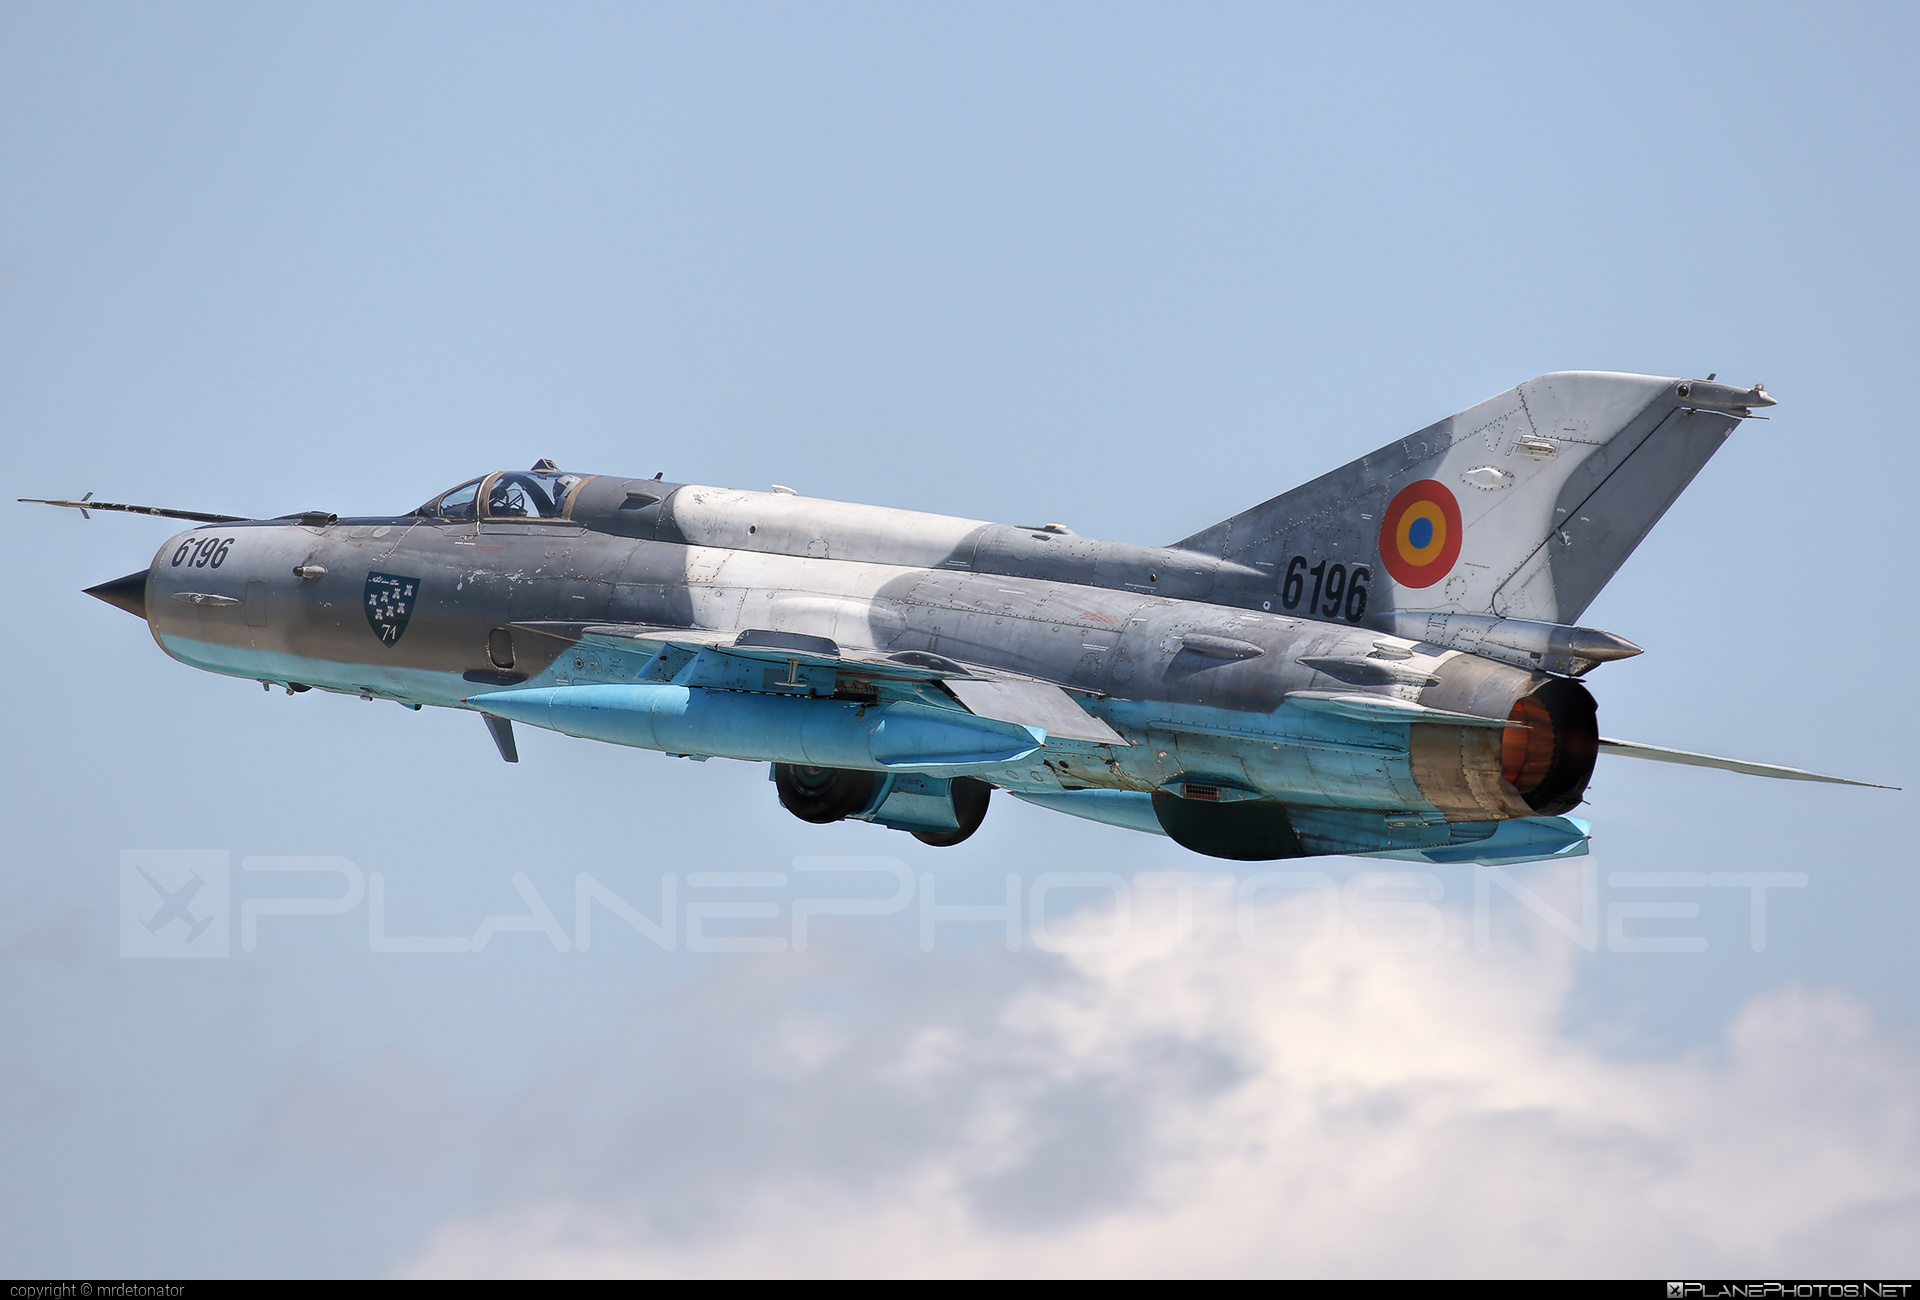 Mikoyan-Gurevich MiG-21MF - 6196 operated by Forţele Aeriene Române (Romanian Air Force) #forteleaerieneromane #mig #mig21 #mig21mf #mikoyangurevich #romanianairforce